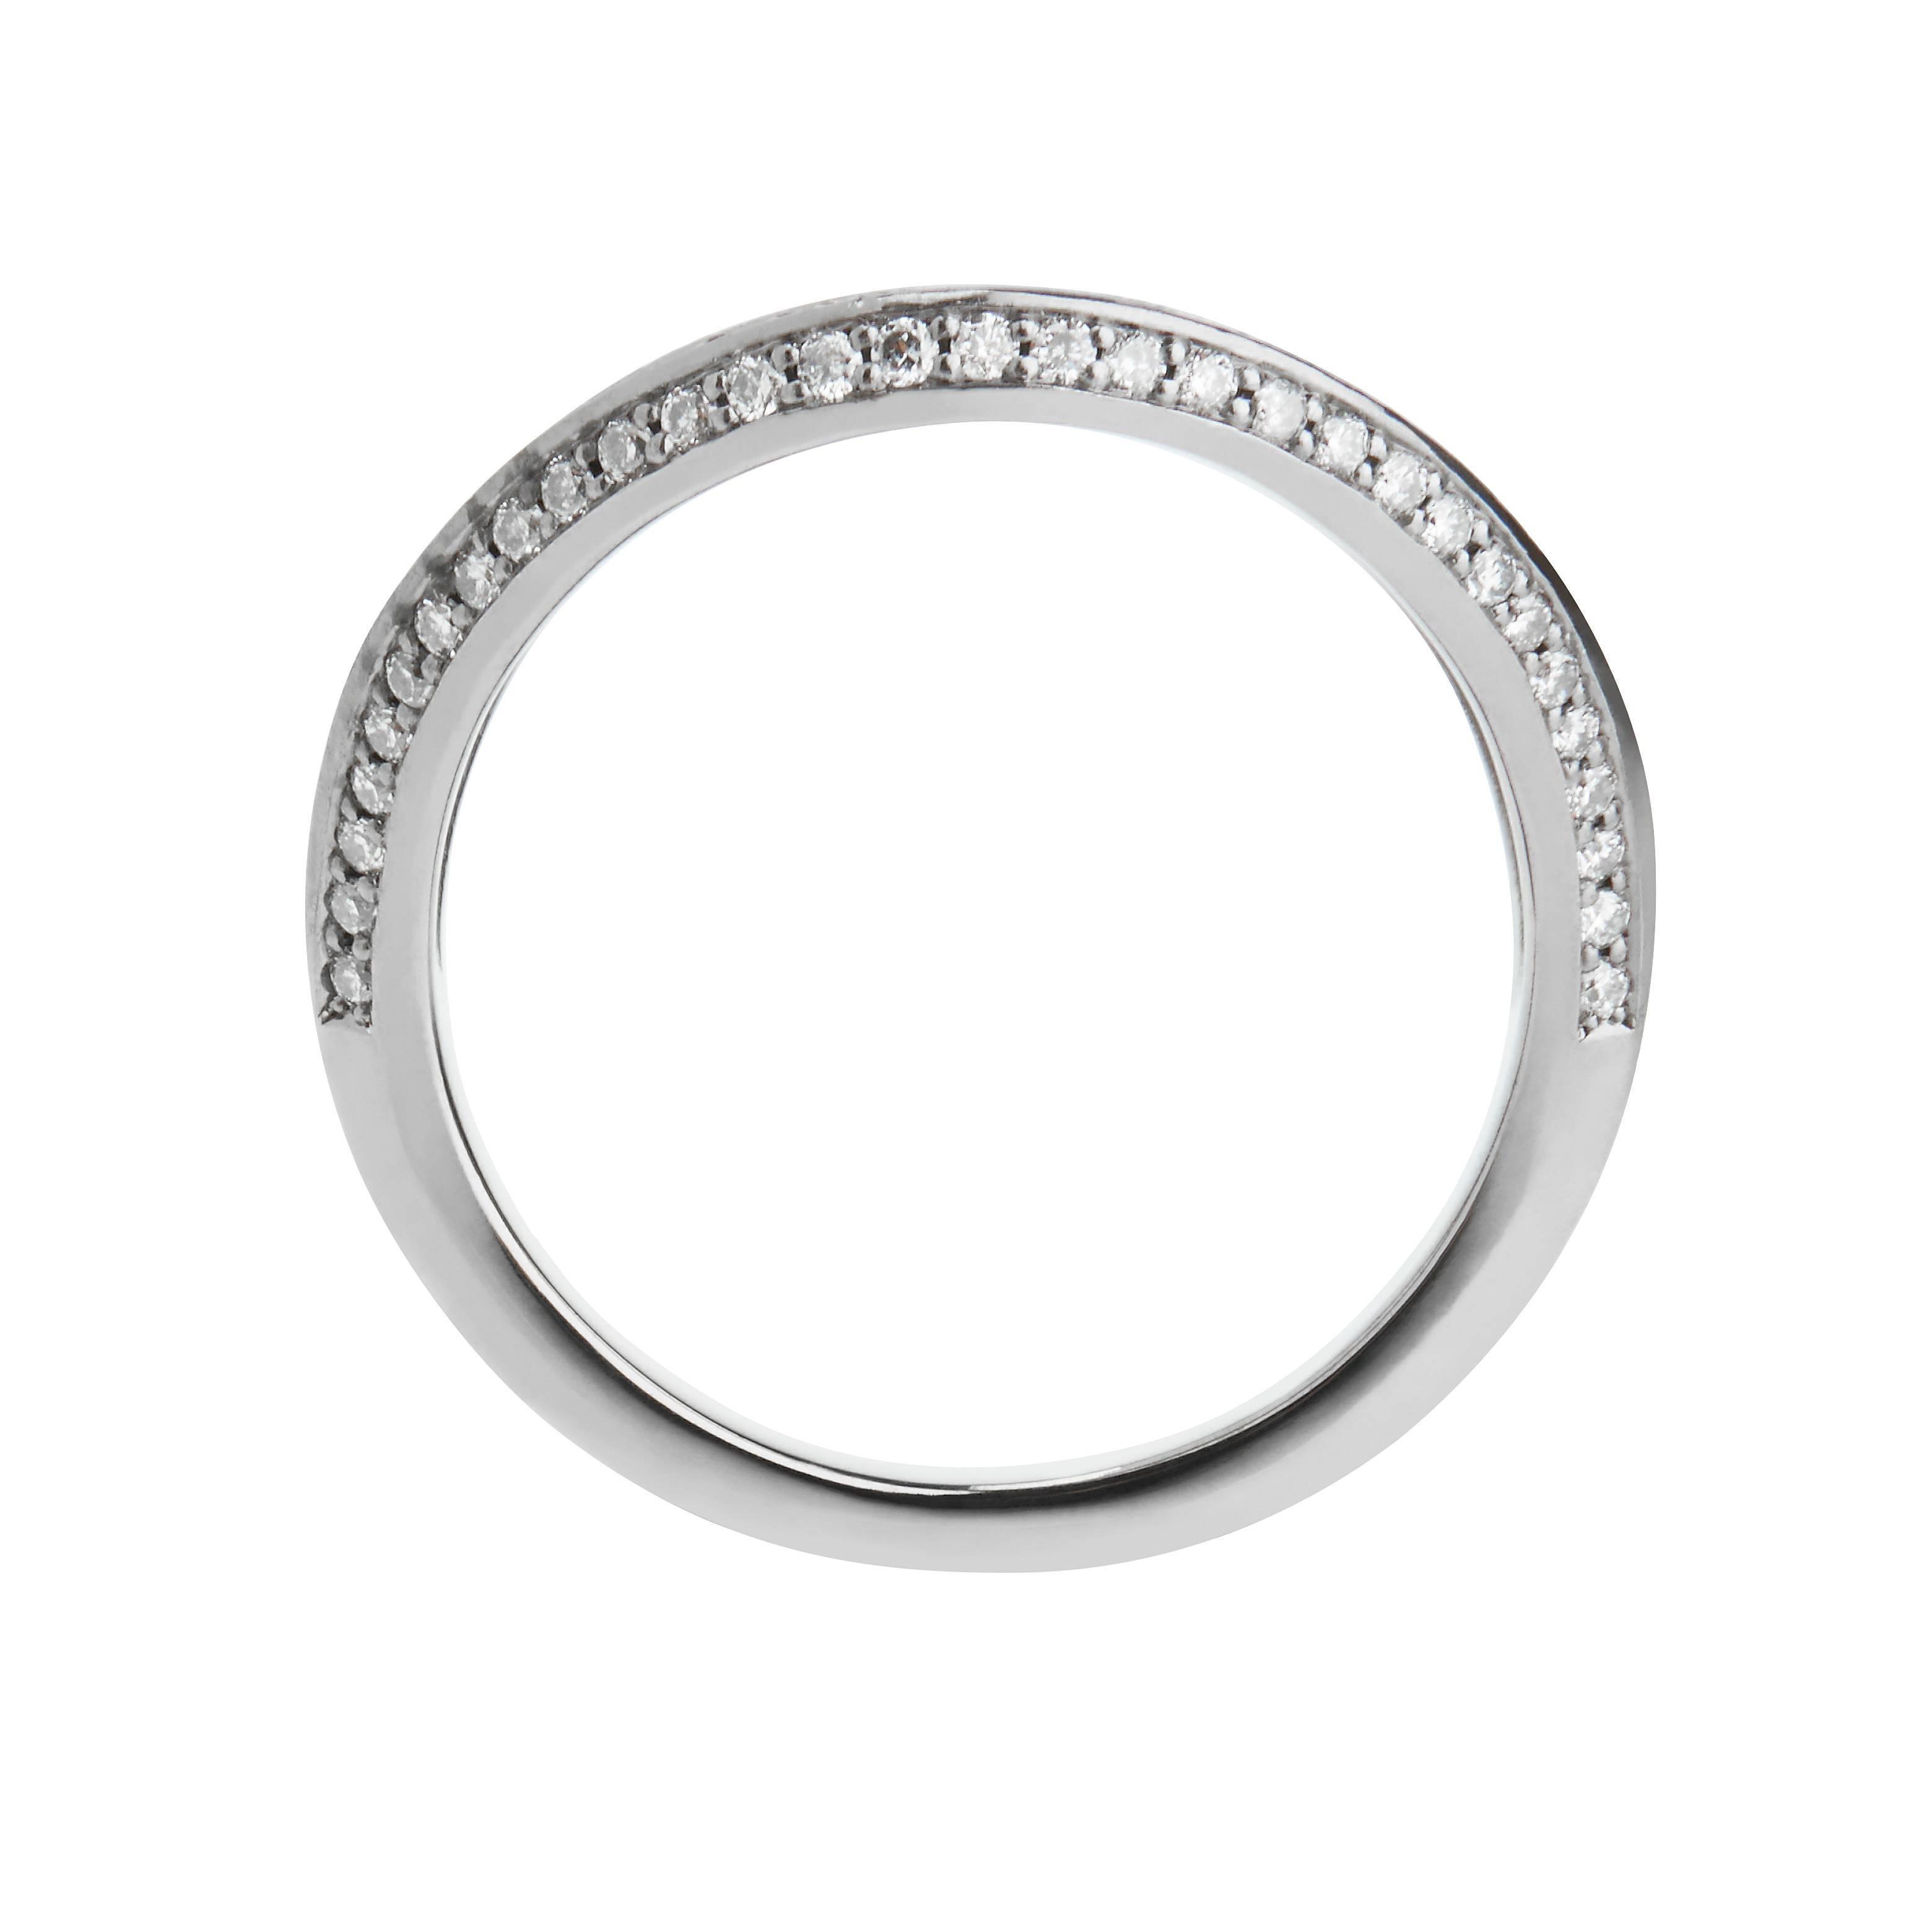 Zara Simon Ibiza Diamond Pave White Gold Ring In New Condition For Sale In London, GB